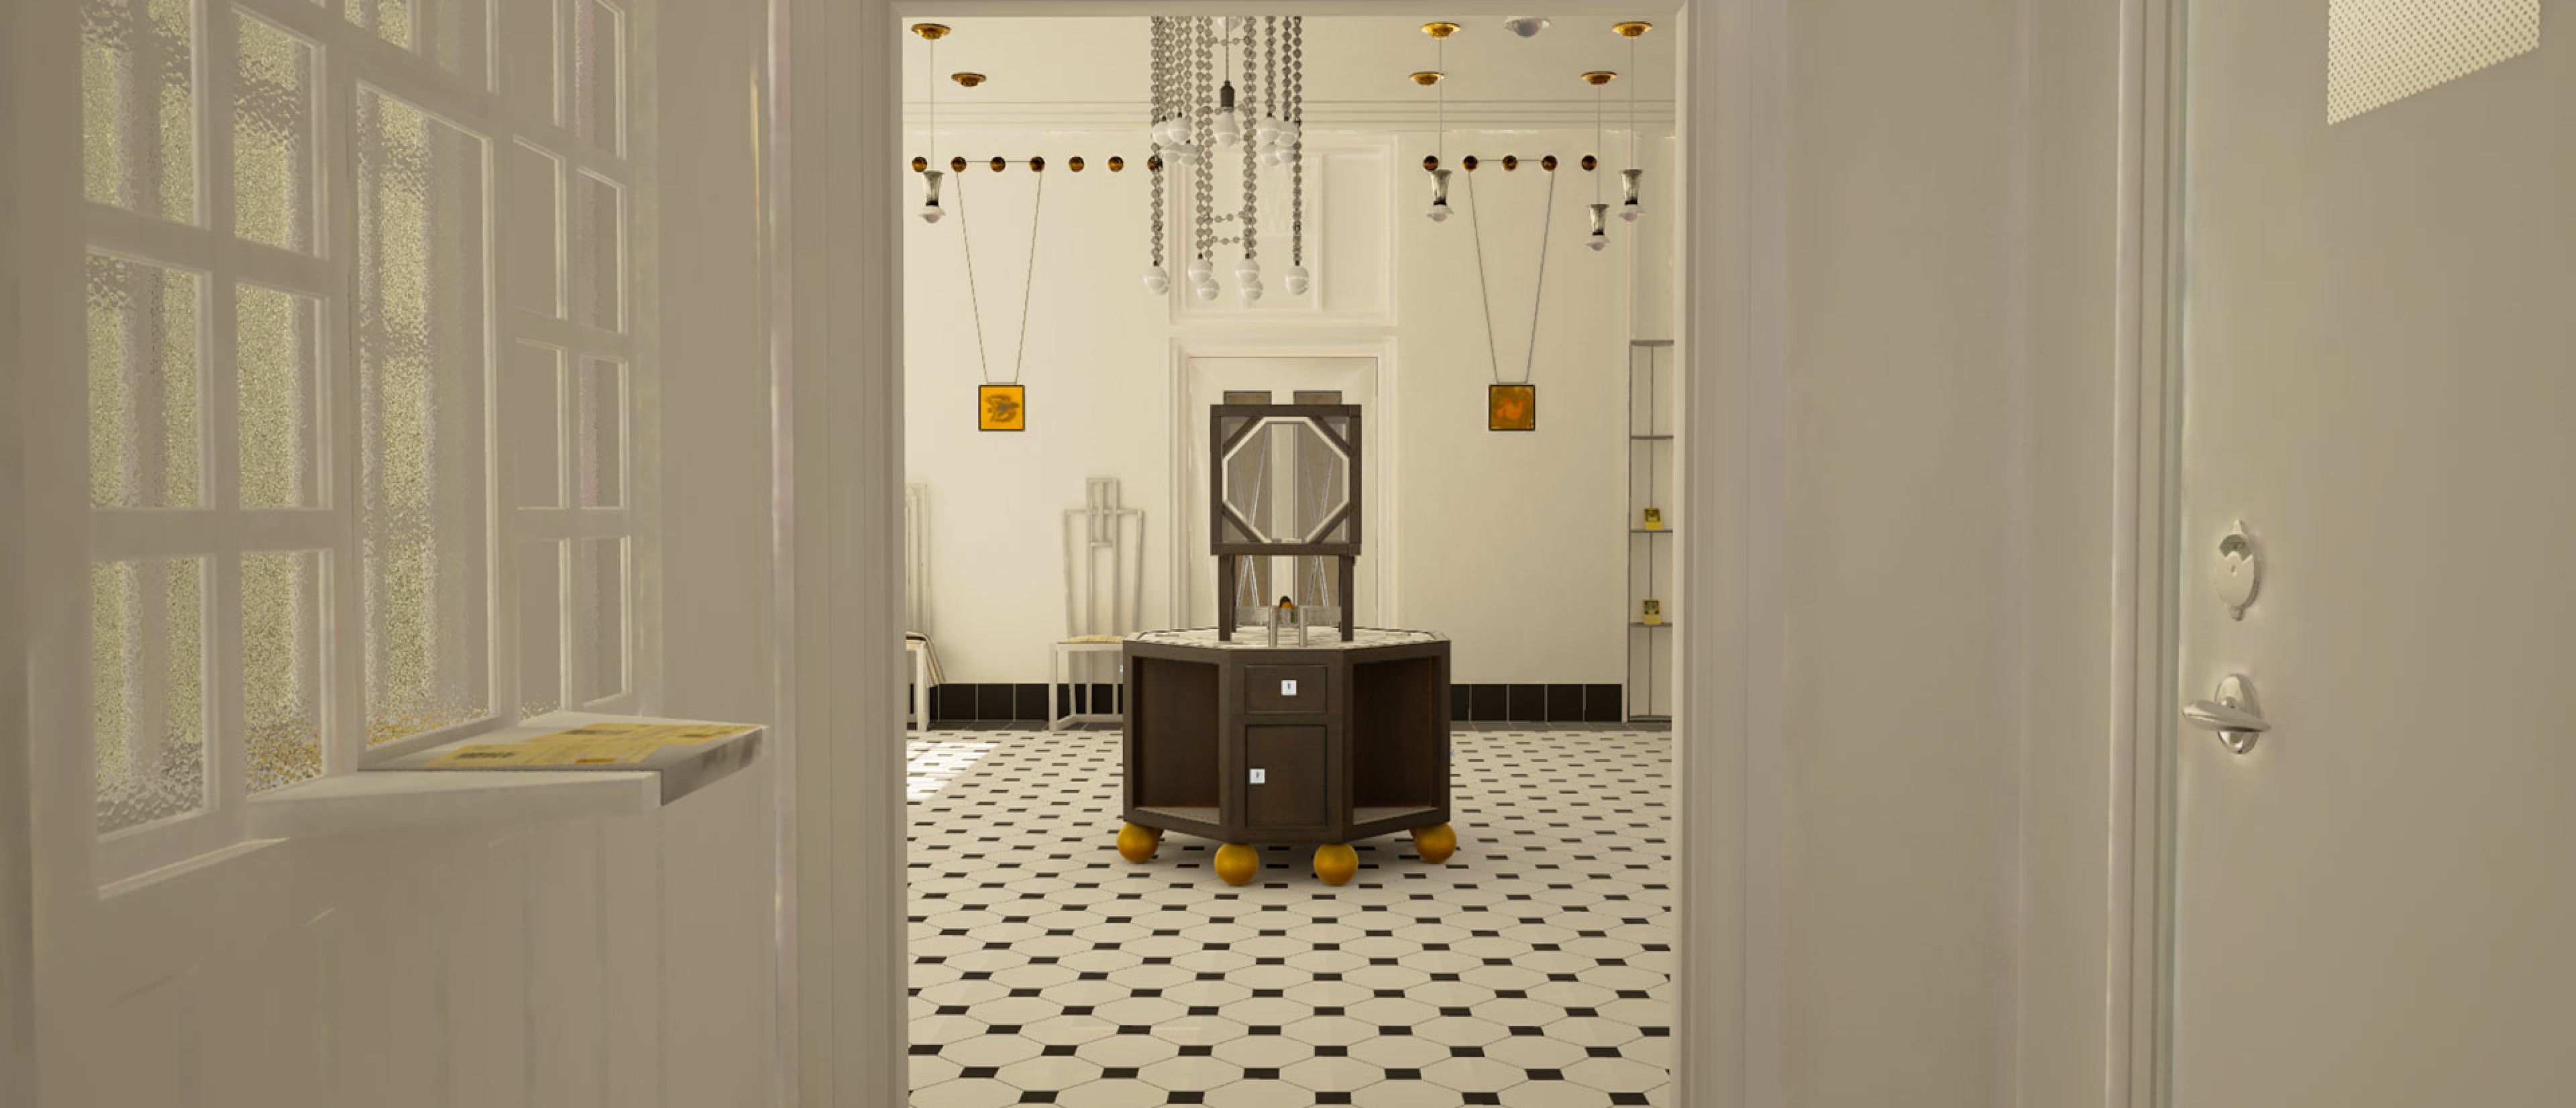 Virtual reality visualization of Wiener Werkstätte salesroom, white double doors, black and white tiled floor. 